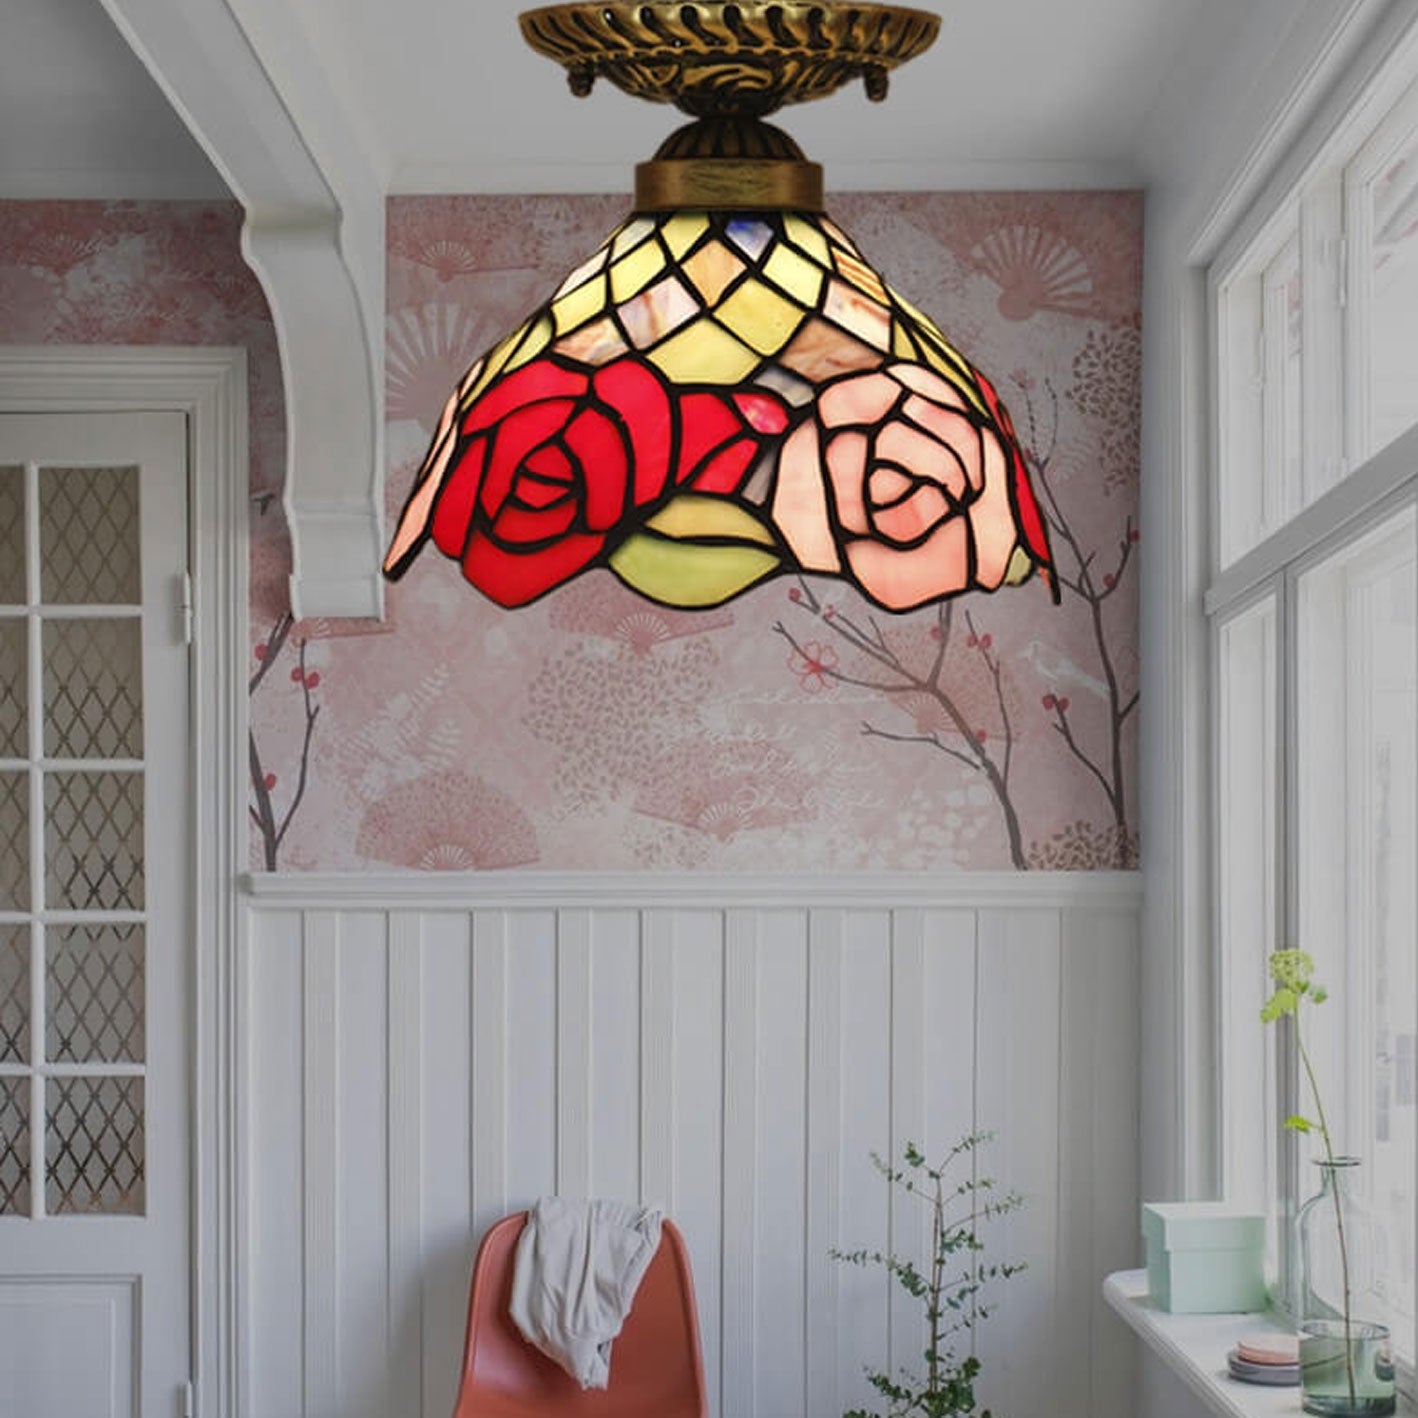 Eryn Vintage Rose Bowl LED Flush Mount Ceiling Light Living Room